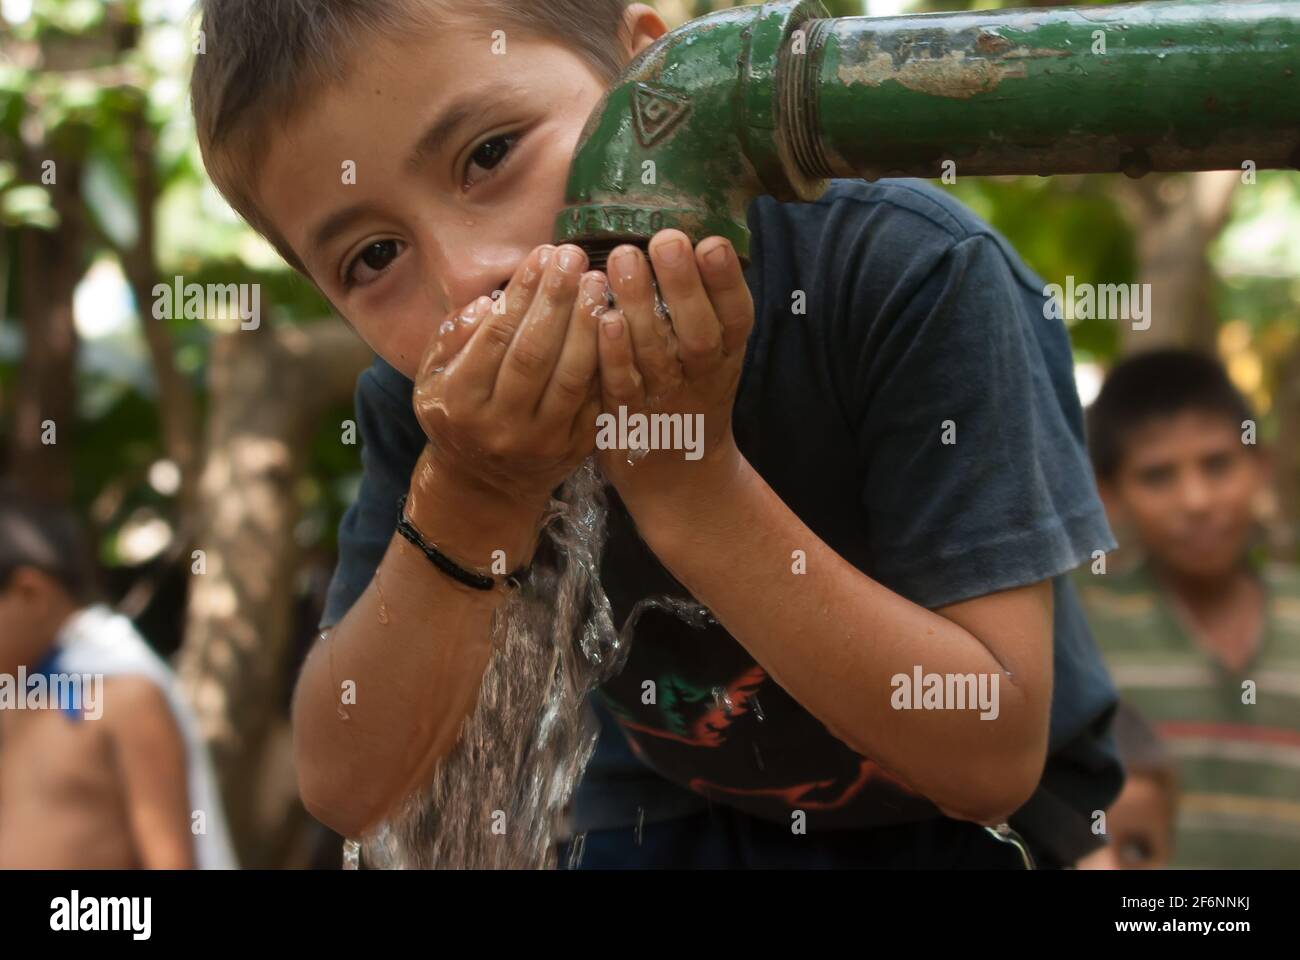 https://c8.alamy.com/comp/2F6NNKJ/la-libertad-el-salvador-11-18-2019-portrait-of-a-boy-drinking-water-from-a-tab-on-the-streets-of-la-libertad-el-salvador-2F6NNKJ.jpg